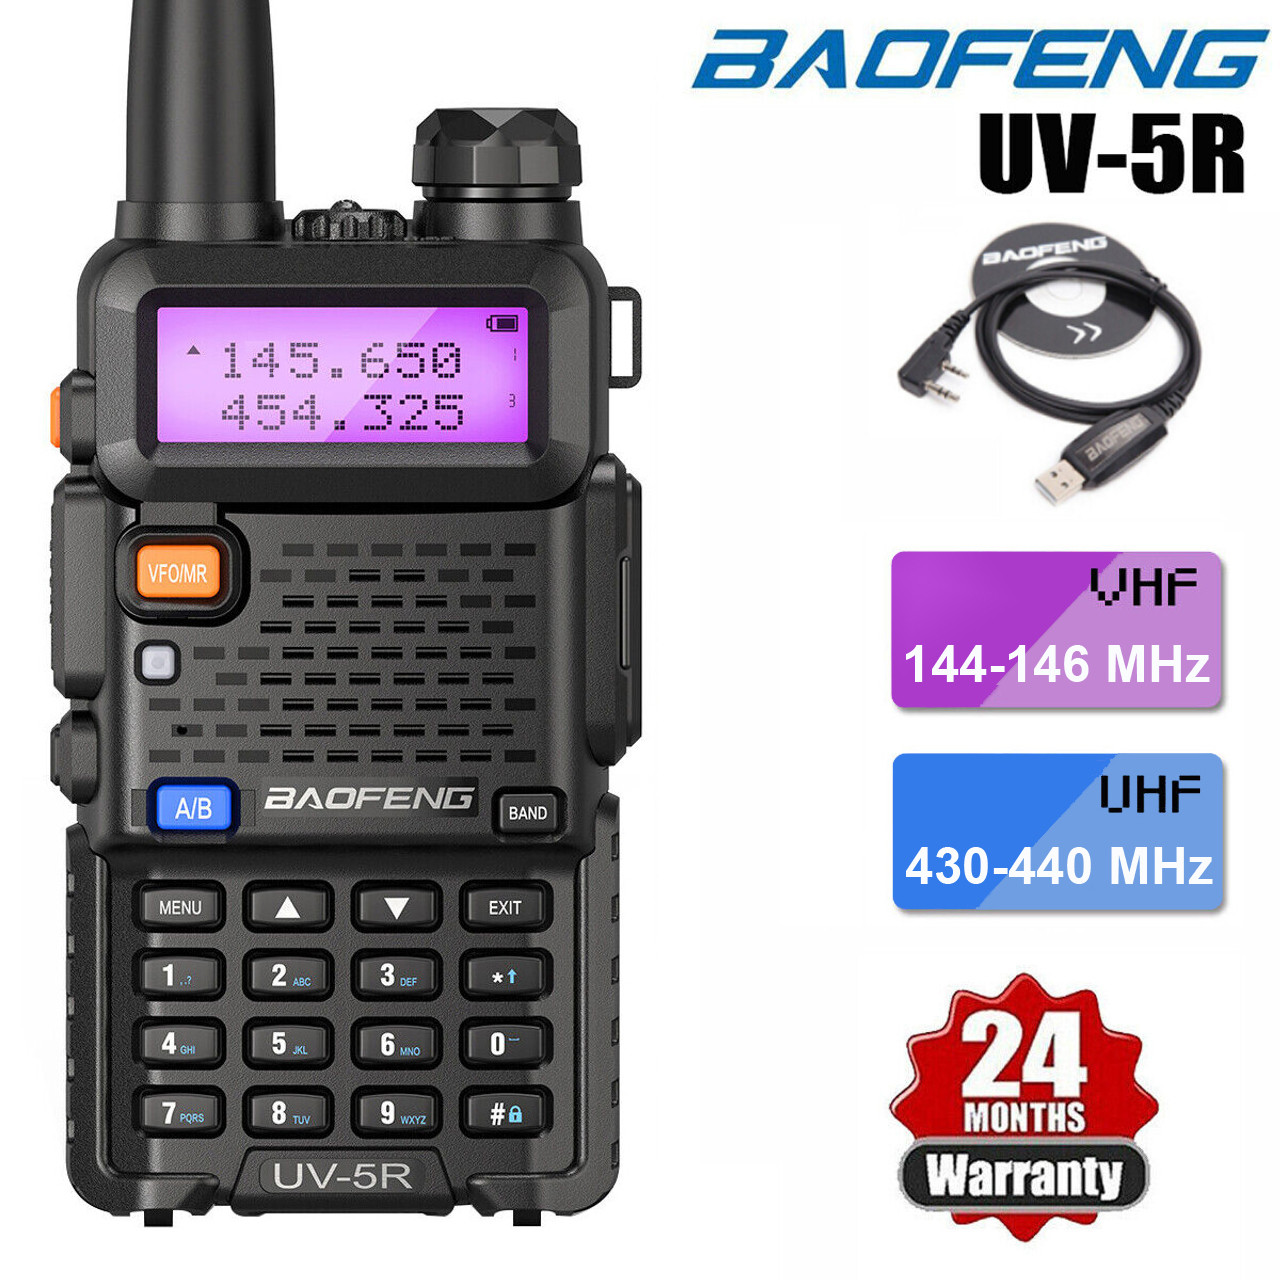 BaoFeng (UV-5R Pro) Ham Radio Handheld Walkie Talkies UHF VHF Dual Band 2-Way Radio Full Kit with an Extra 3800mAh Battery, Earpiece and Programming C - 2